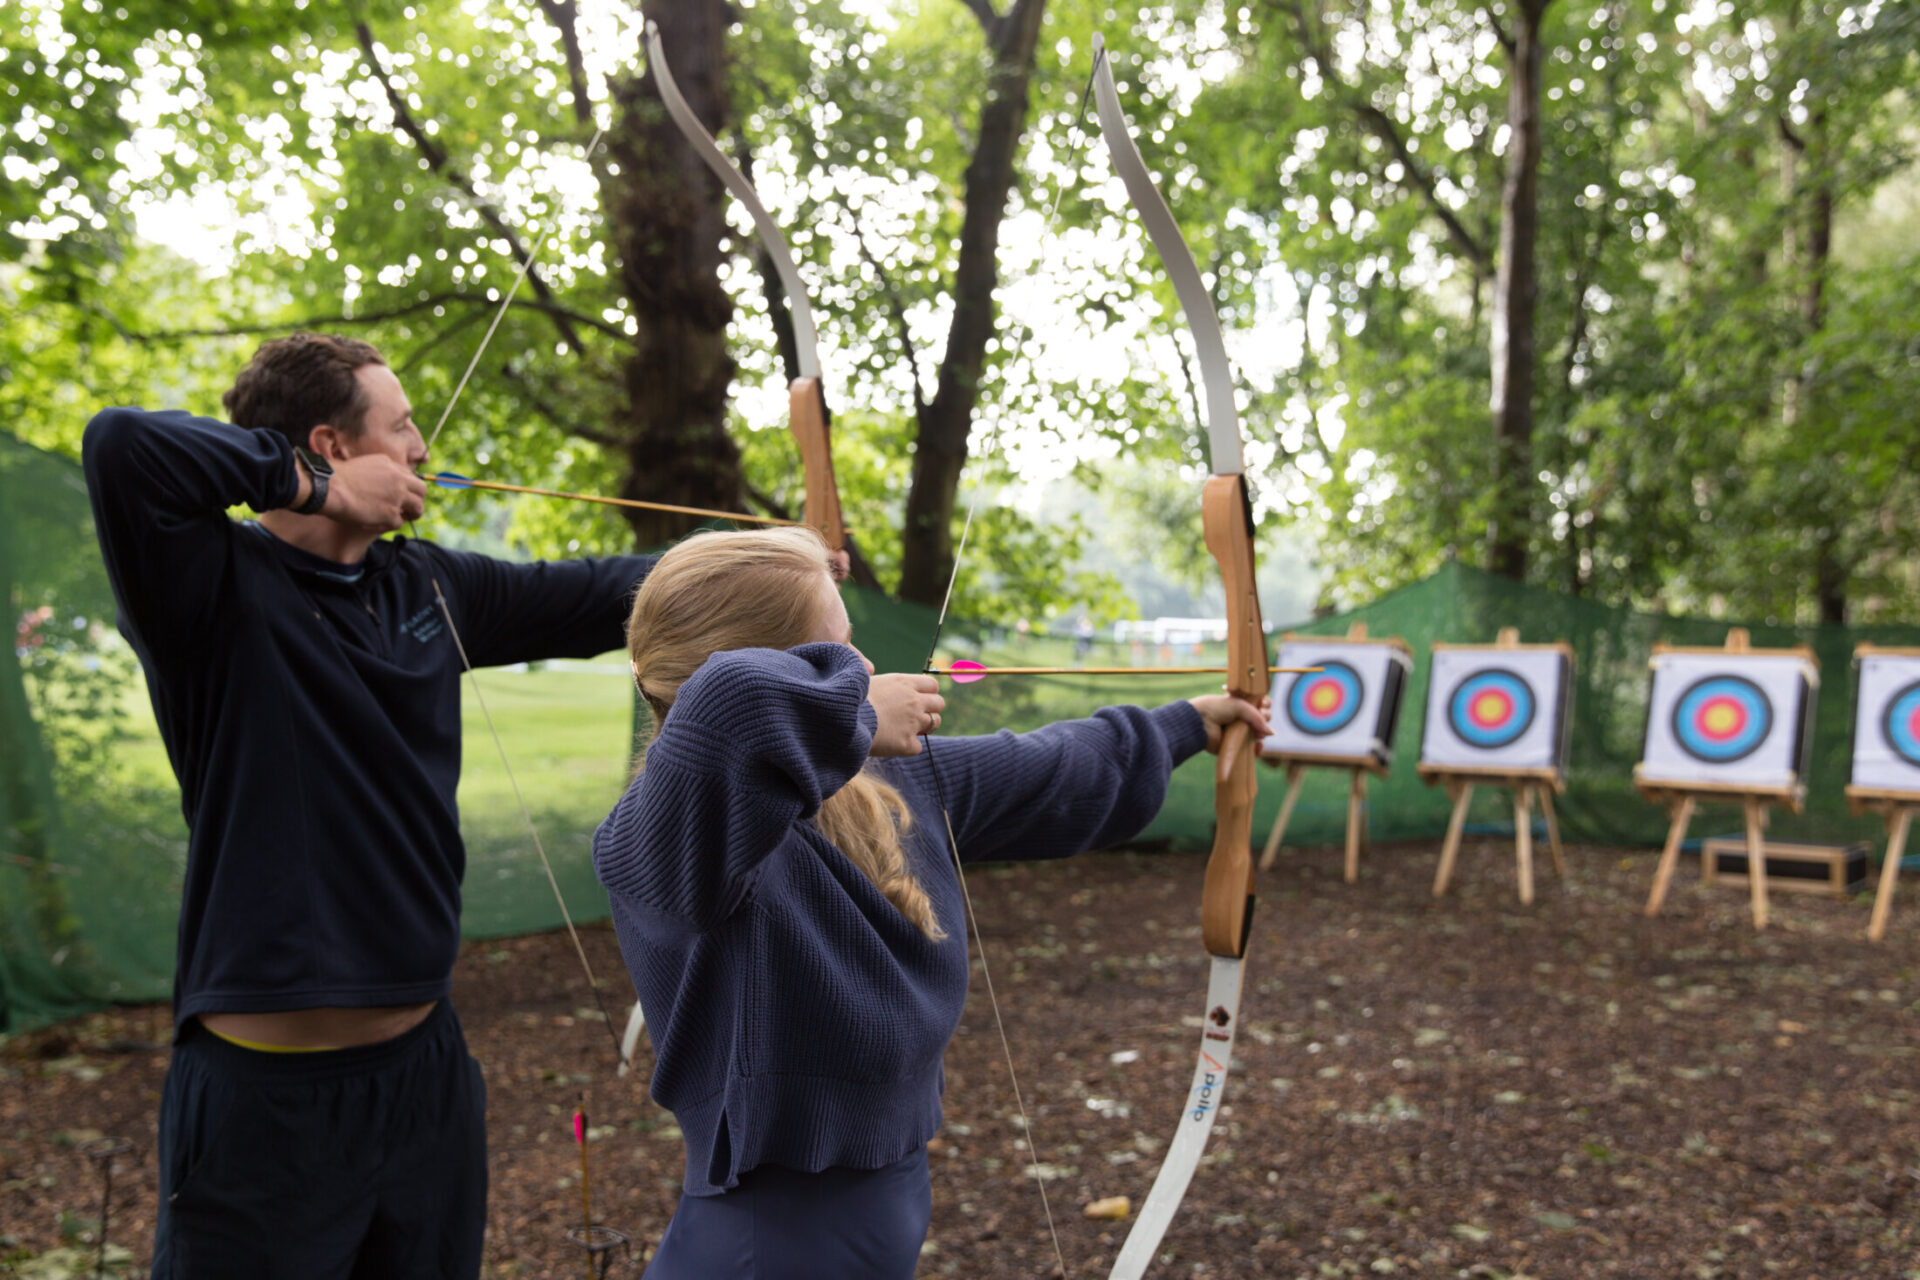 Archery Activities